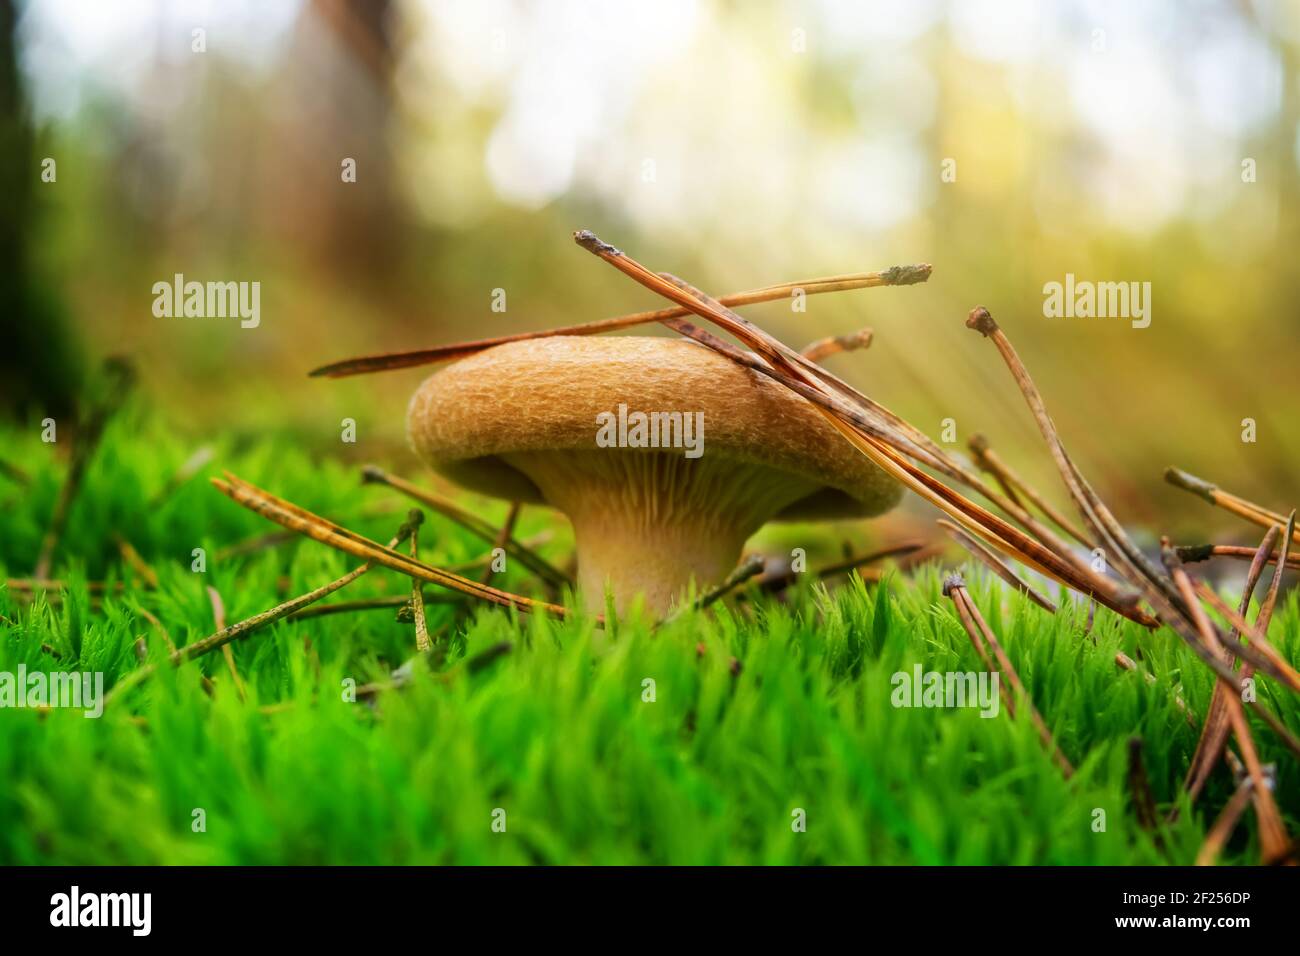 Forest mushroom paxillus on green moss with pine needles. Toxic mushroom. Macro Stock Photo